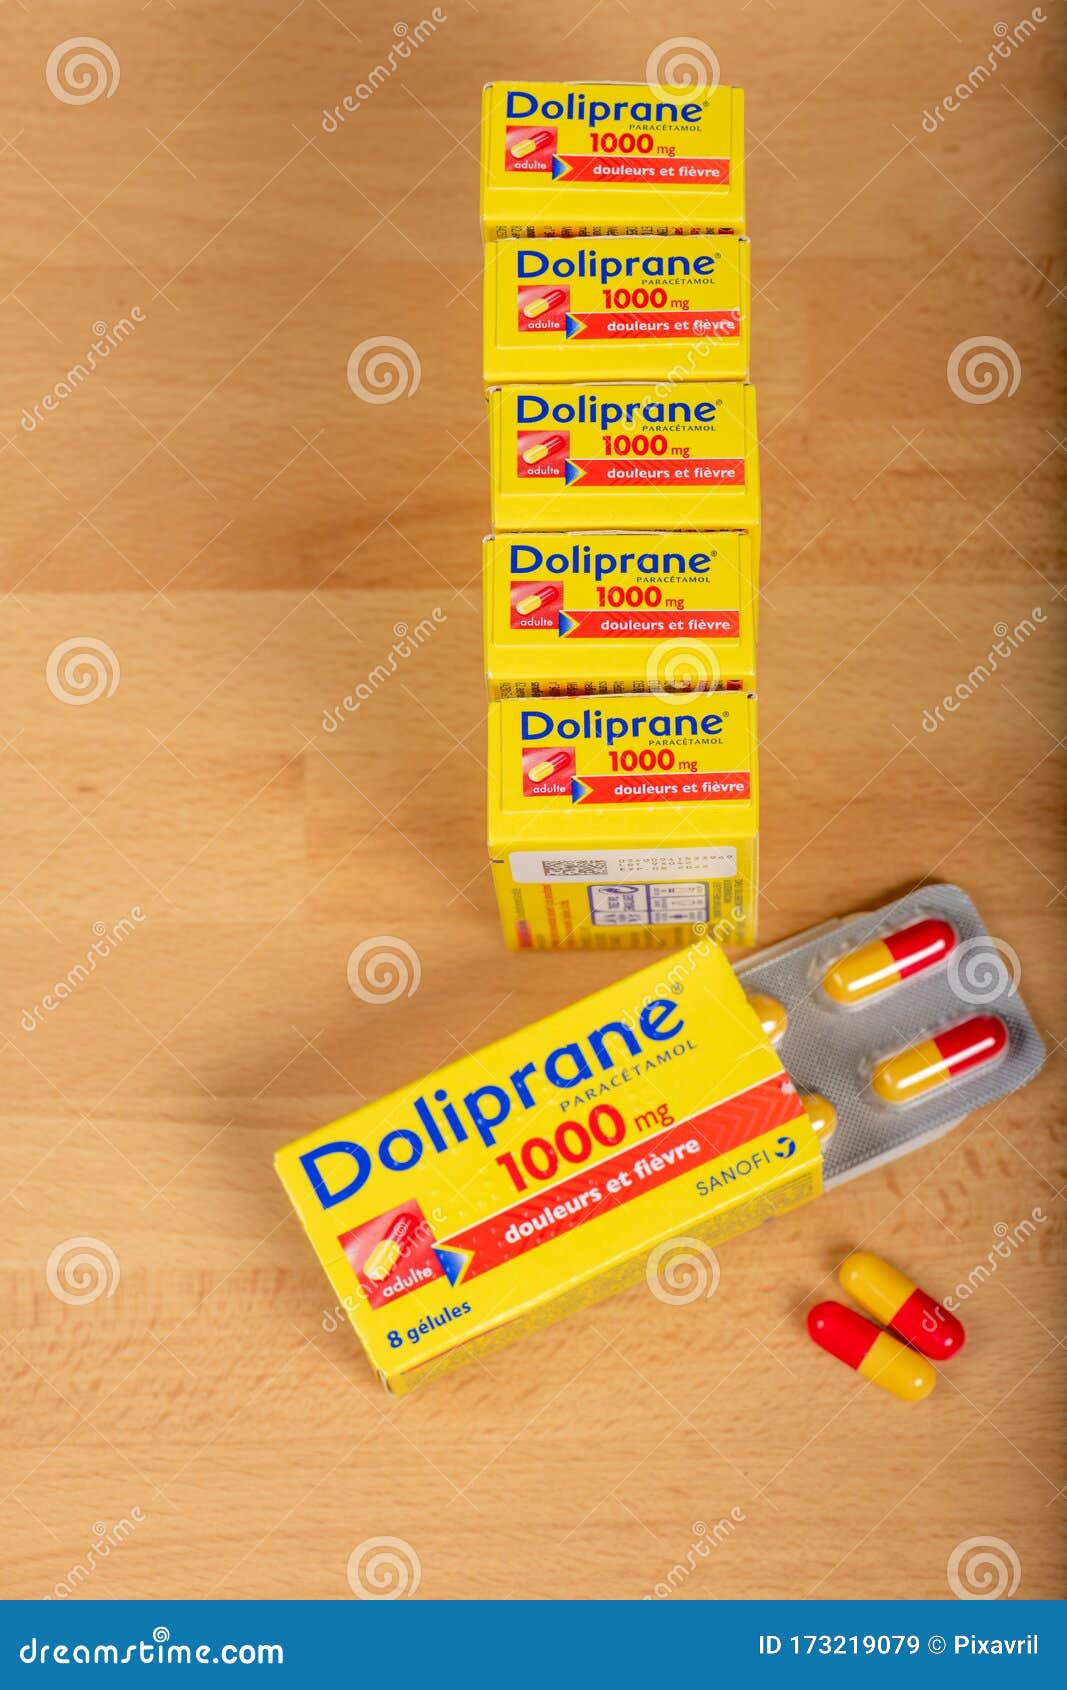 DOLIPRANE adultes 1000 mg 8 sachets - Pharma-Médicaments.com